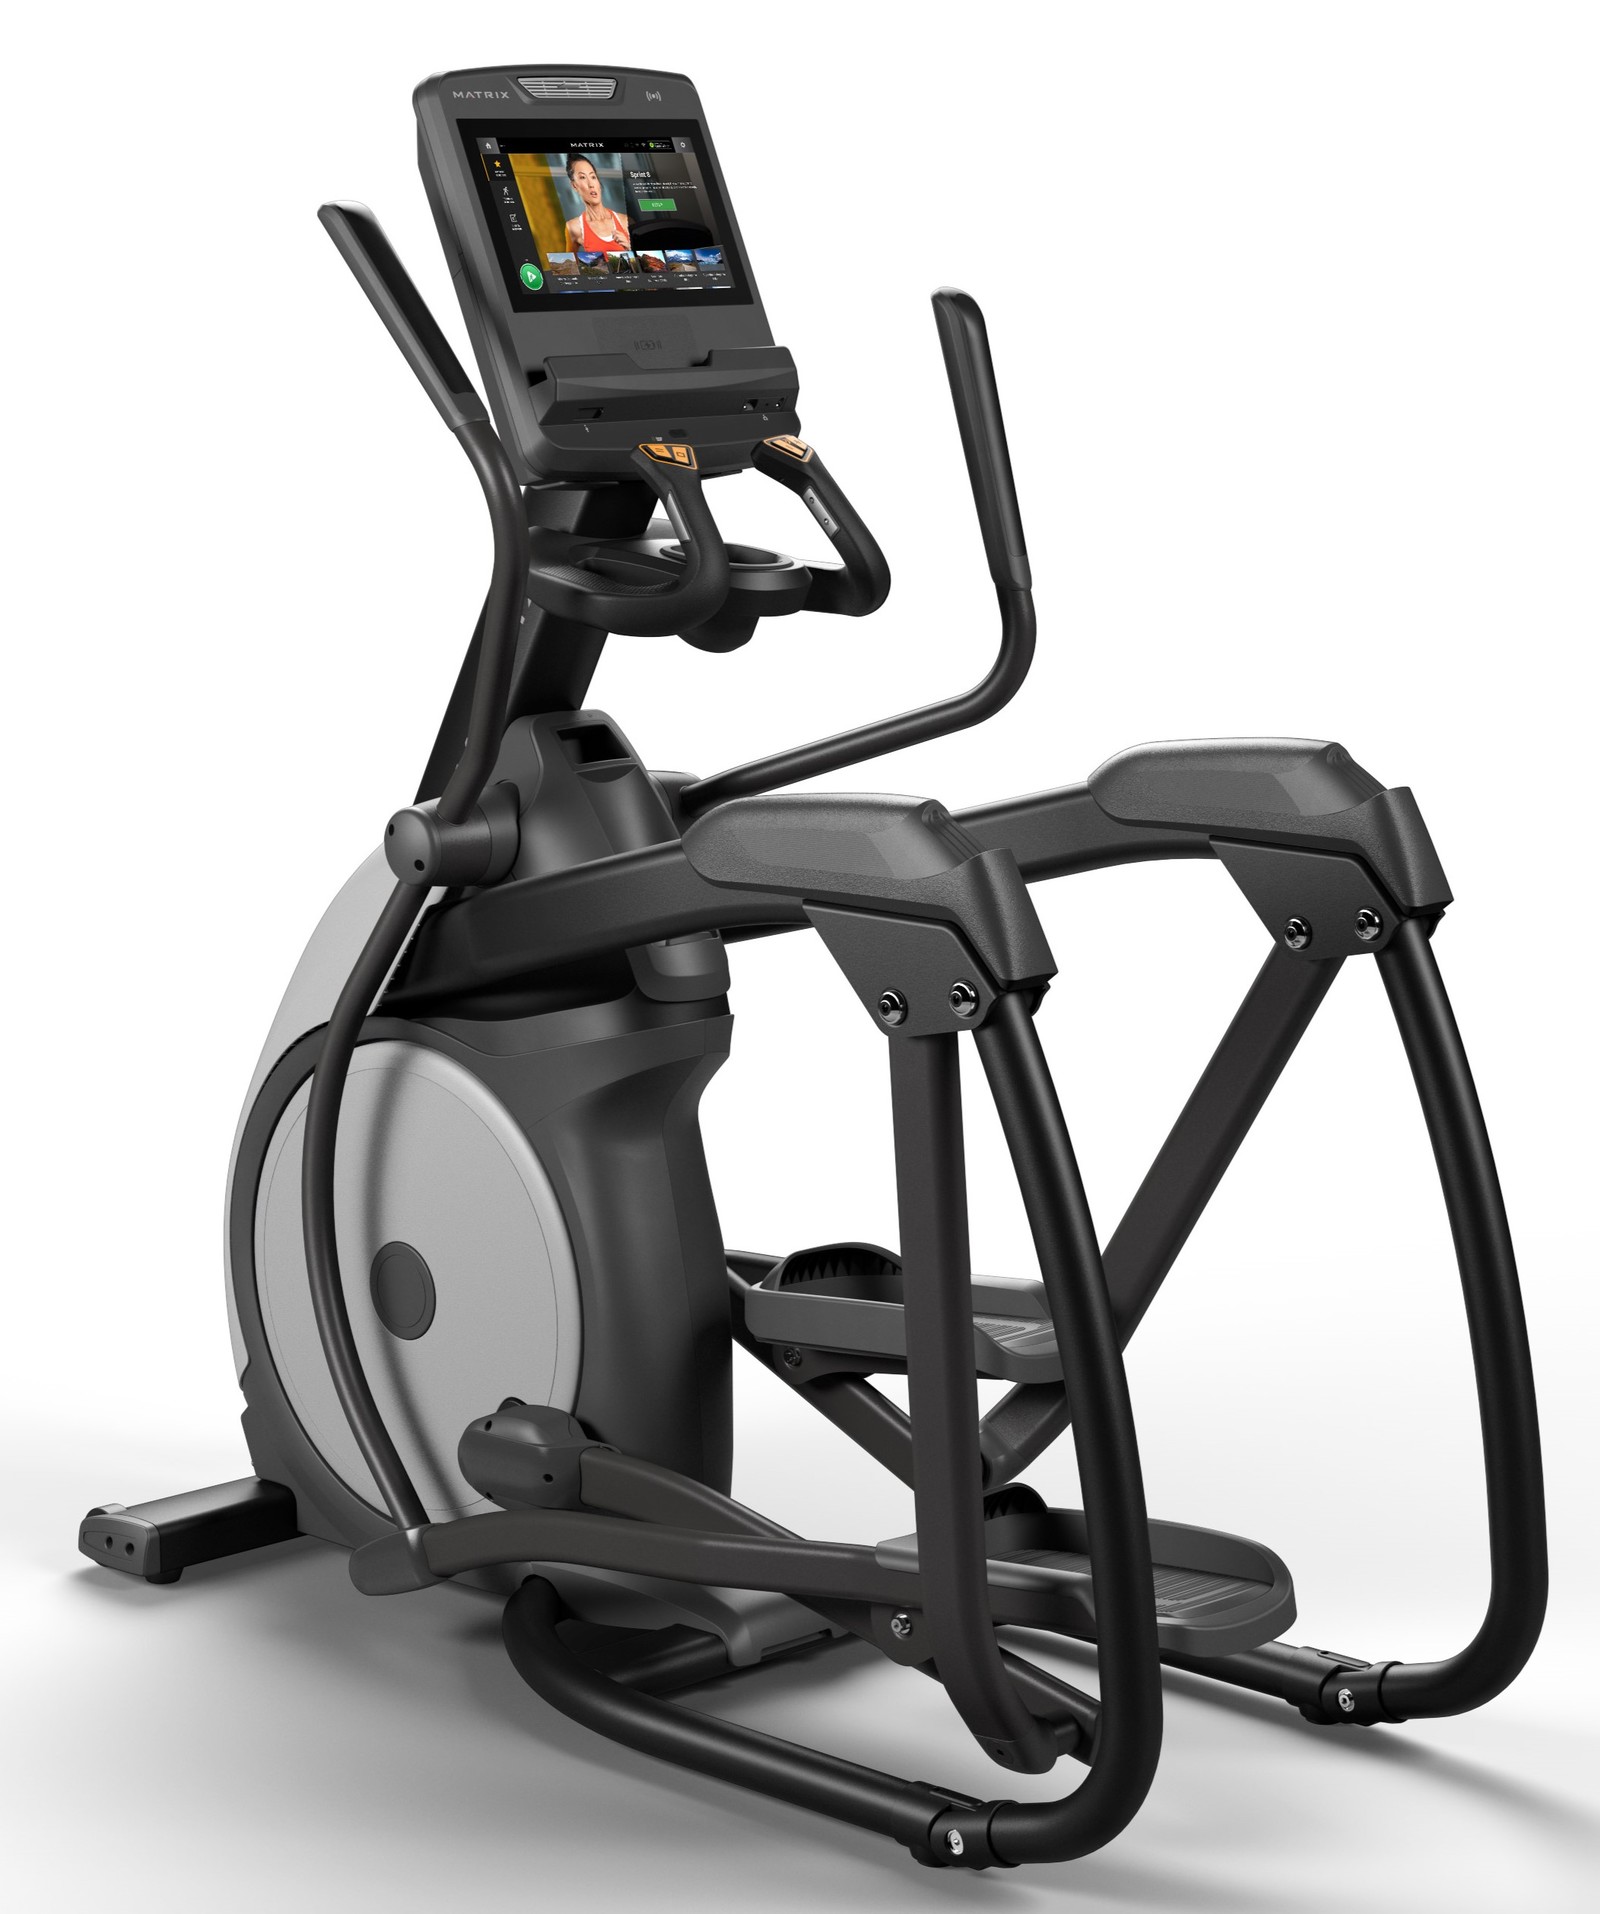 Эллиптический тренажер True Fitness C900 (консоль Envision 9) preview 3